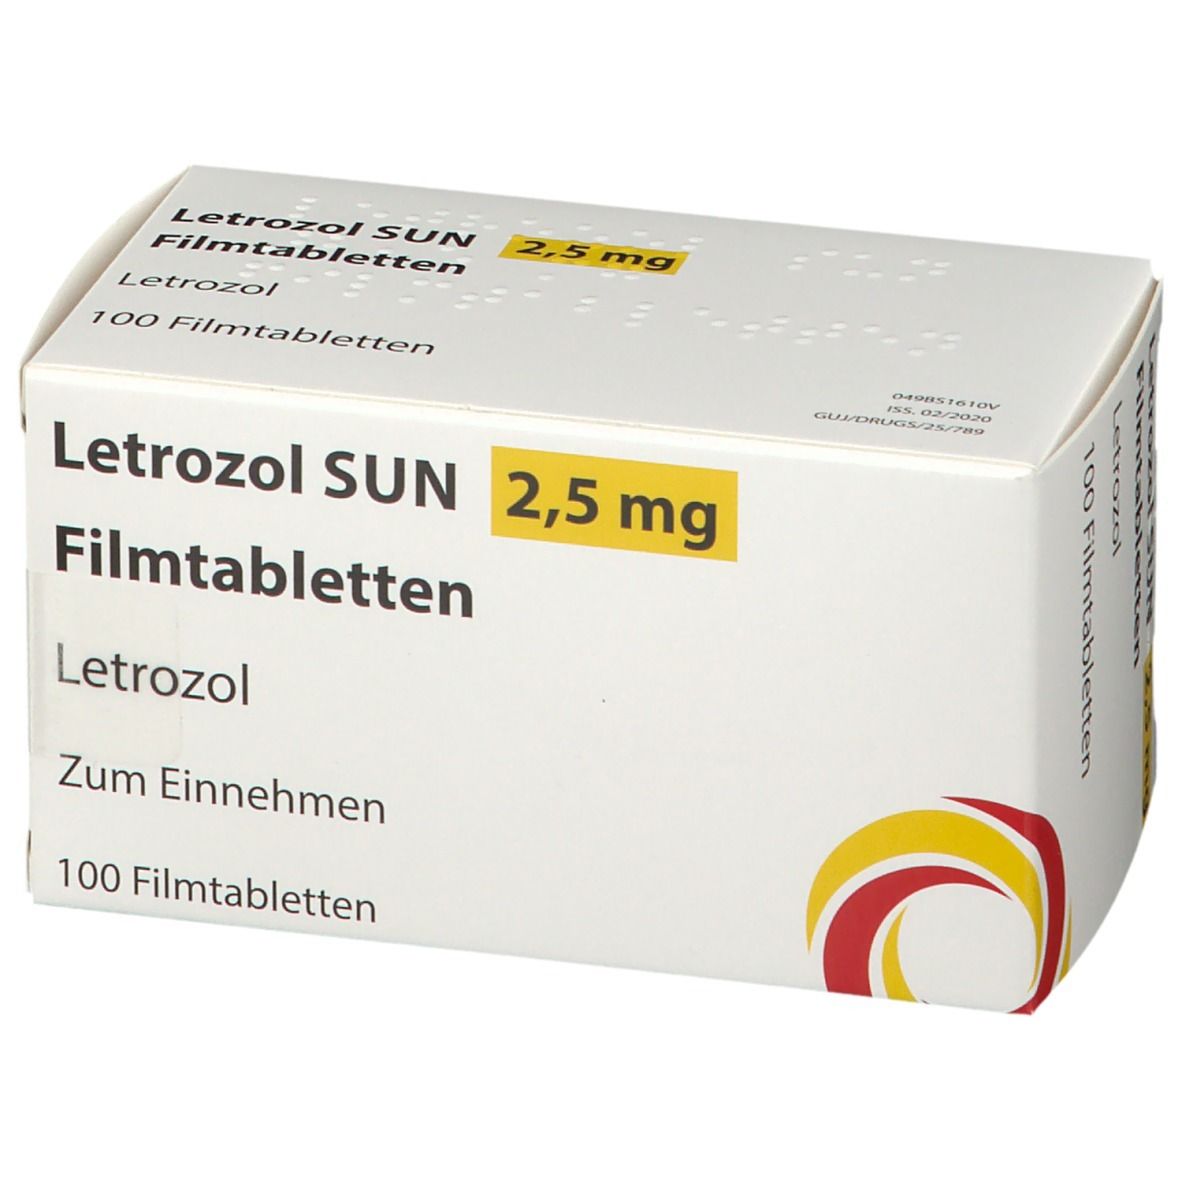 Letrozol SUN 2,5 mg